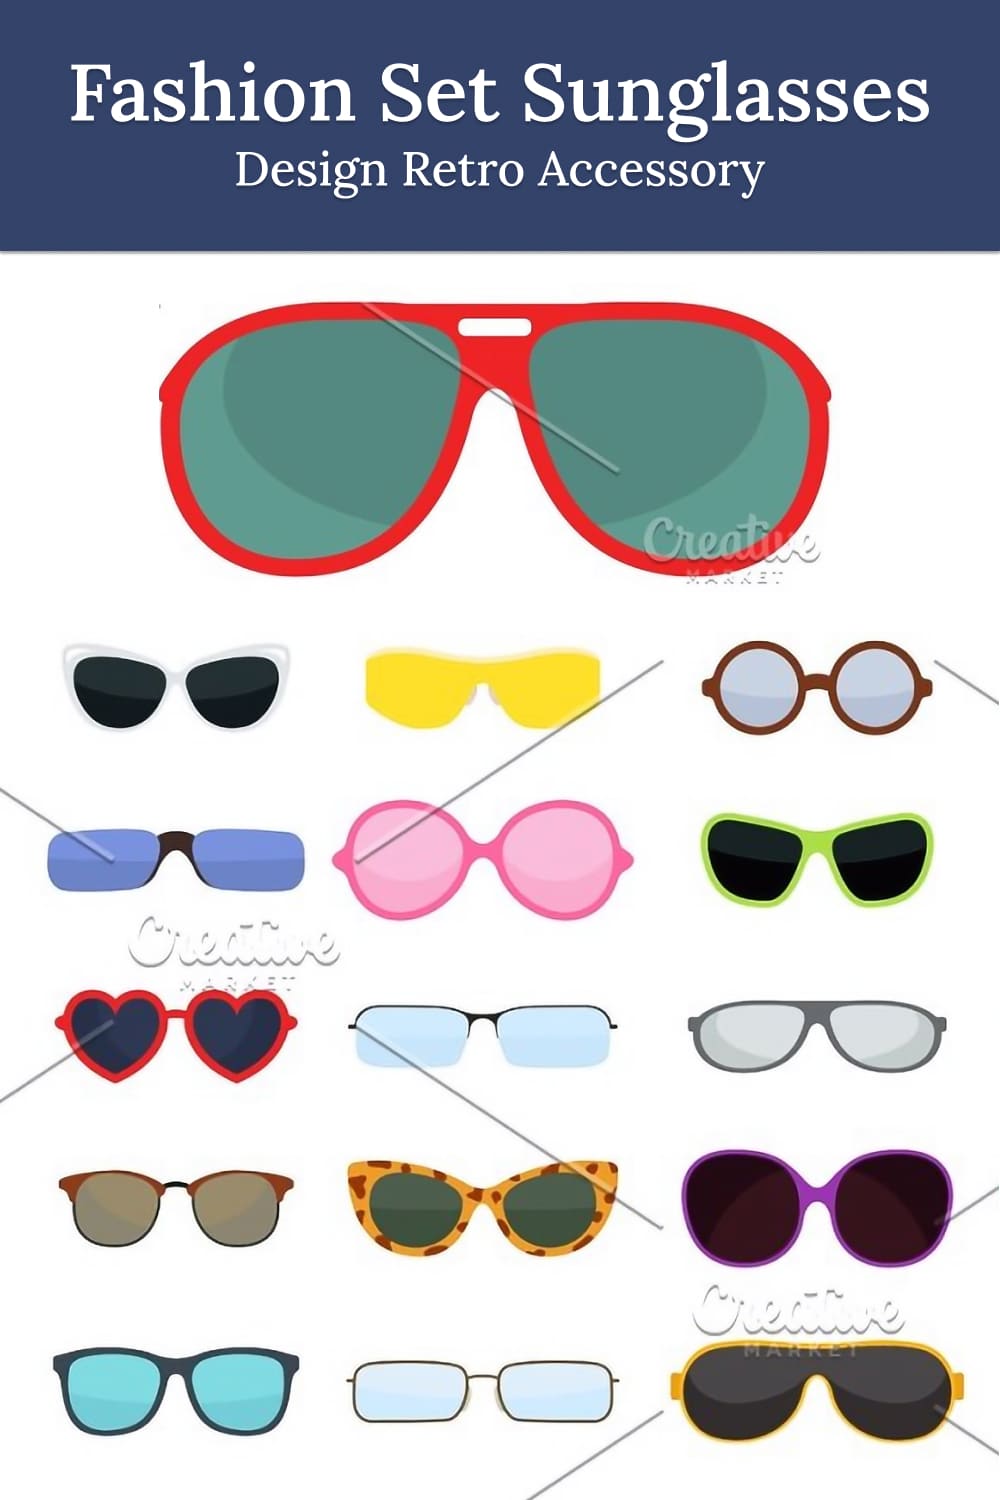 Fashion set sunglasses design retro accessory pinterest image.